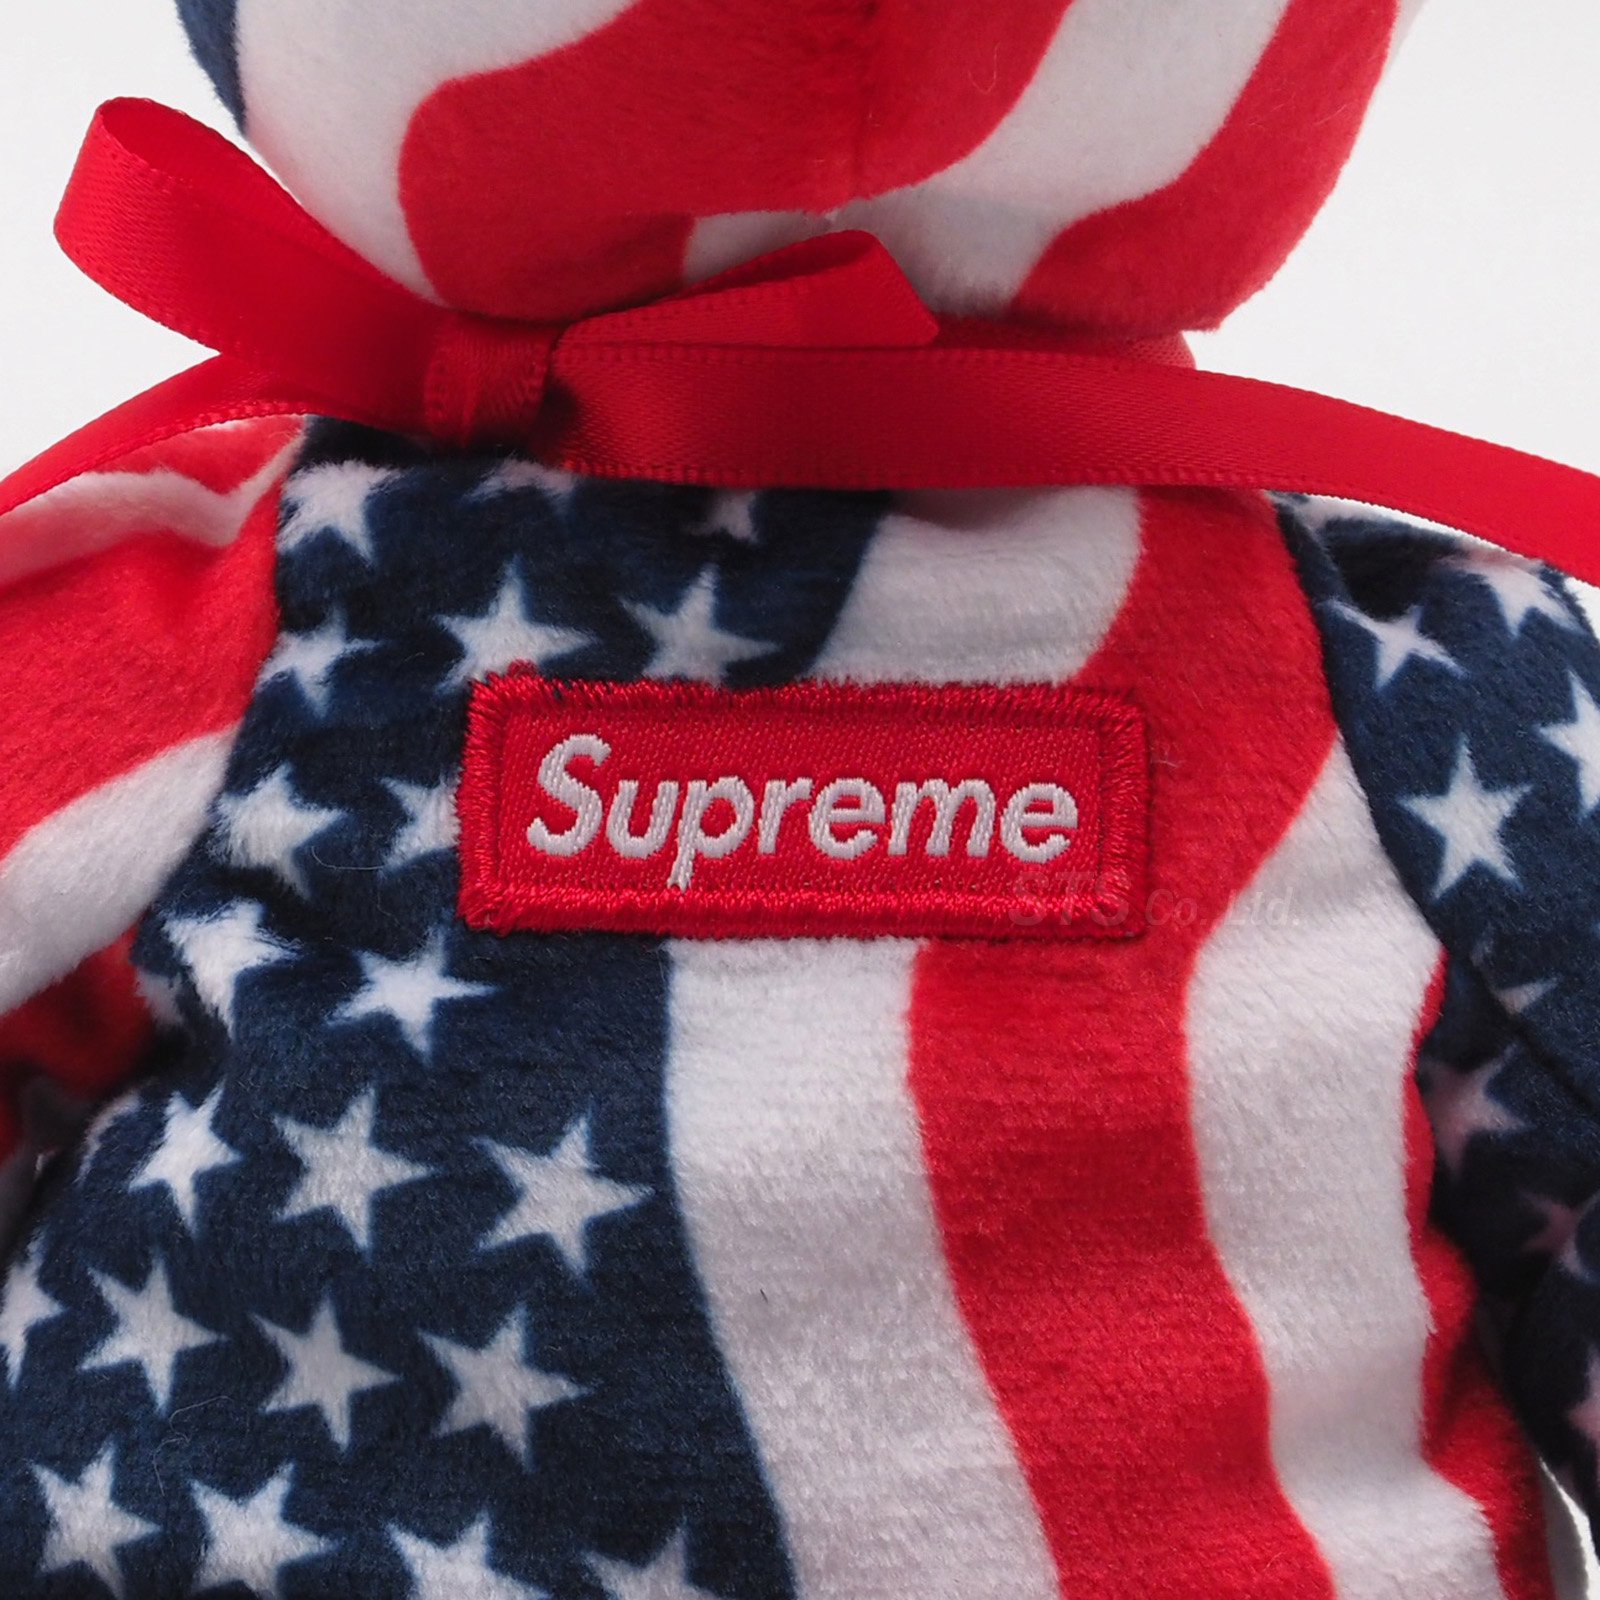 Supreme / ty Beanie Baby "Flag"